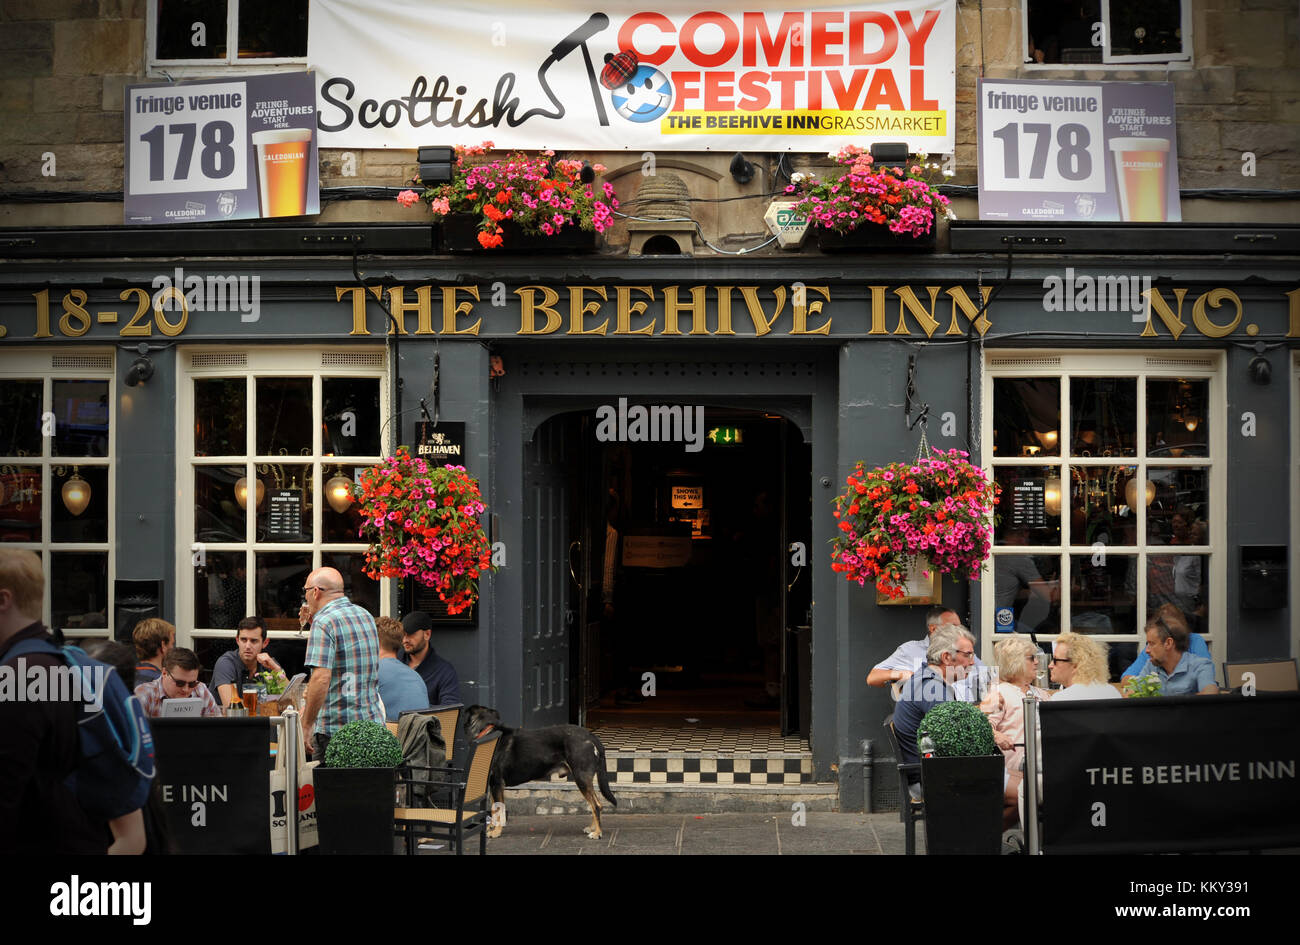 Beehive Inn Grassmarket Edinburgh Scottish Comedy Festival Stock Photo